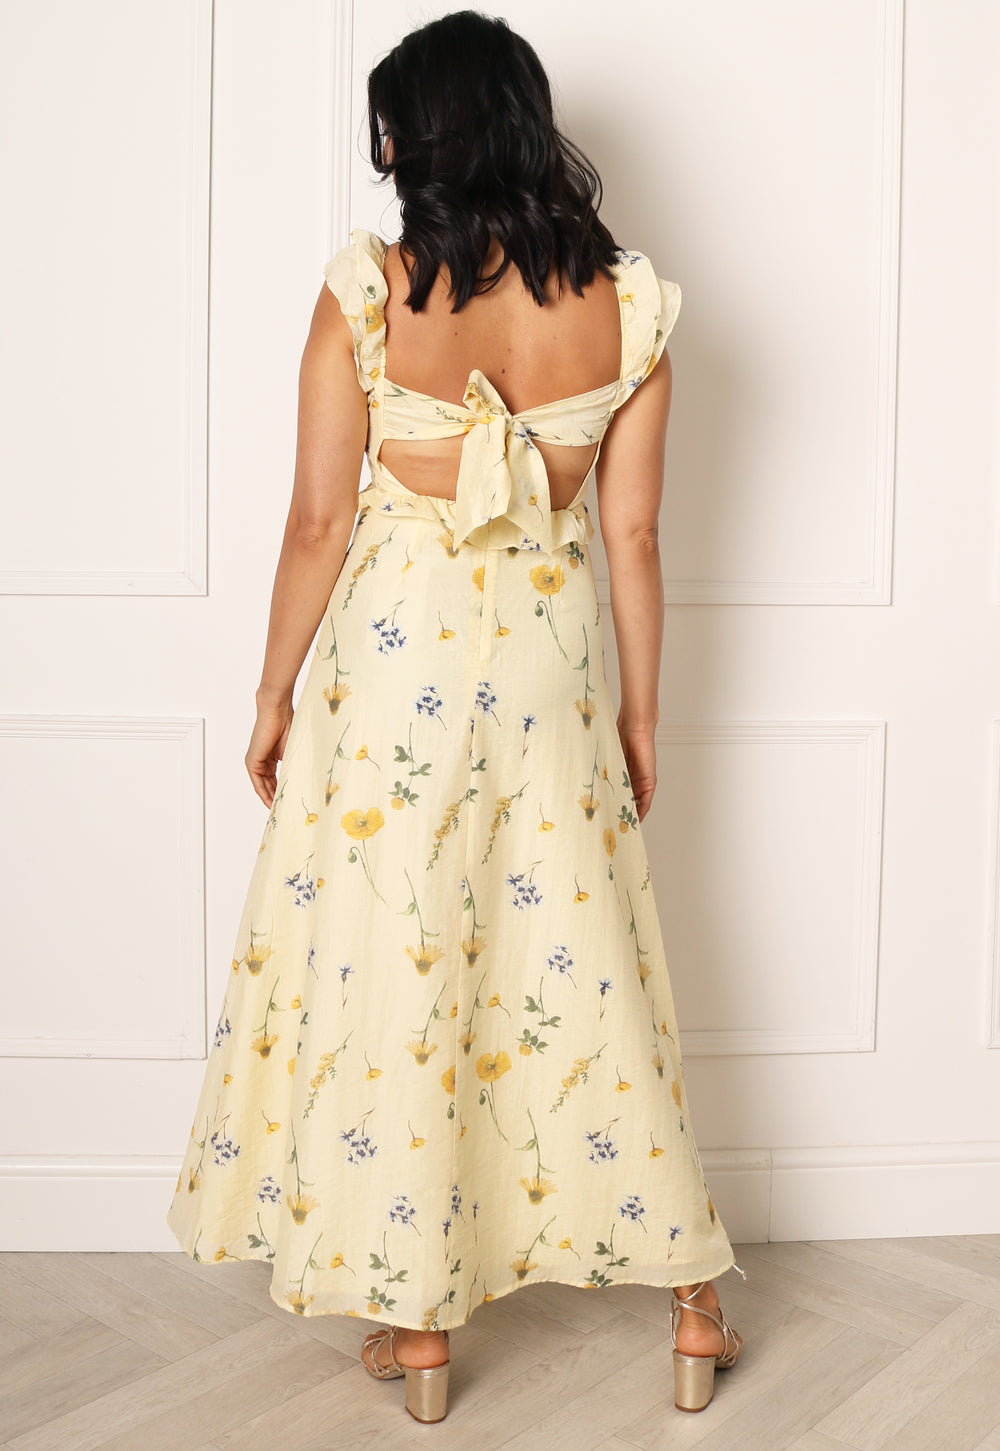 VERO MODA Backless Floral Frill Midi Dress in Lemon Yellow | One Nation Clothing VERO MODA Adeline Backless Frill Detail Midi in Lemon Yel